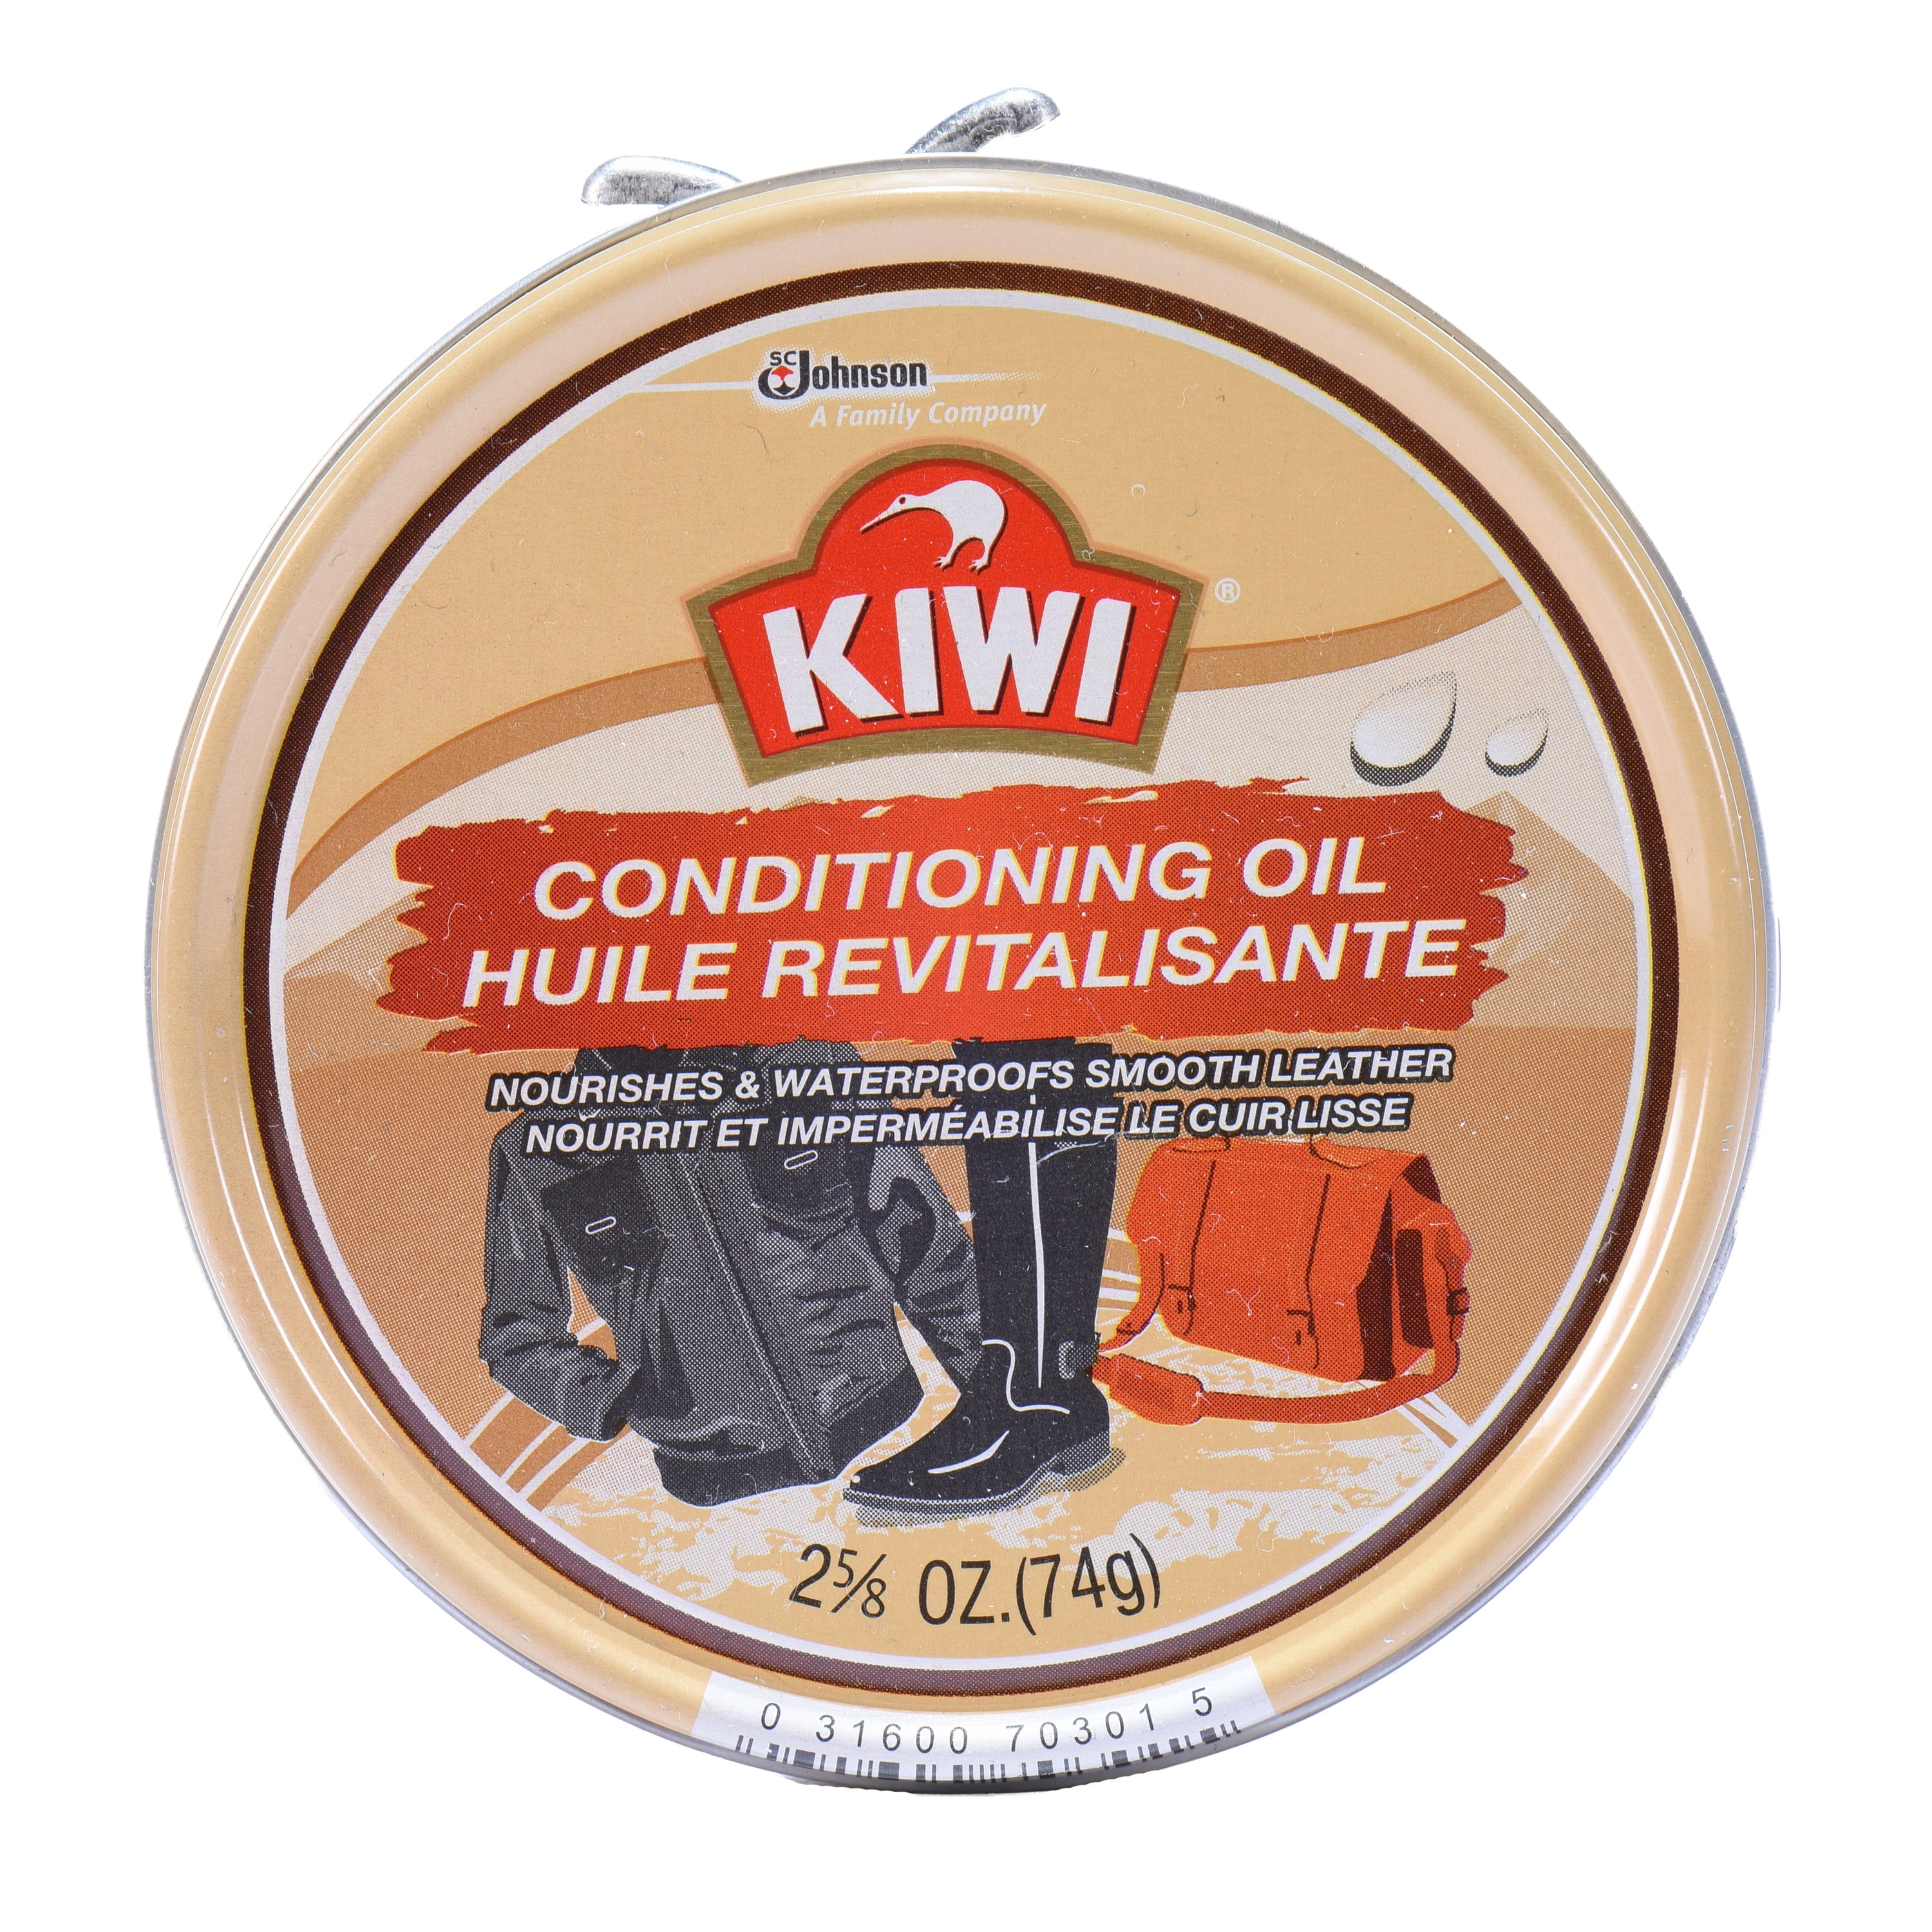 KIWI Conditioning Oil 2.625 oz 